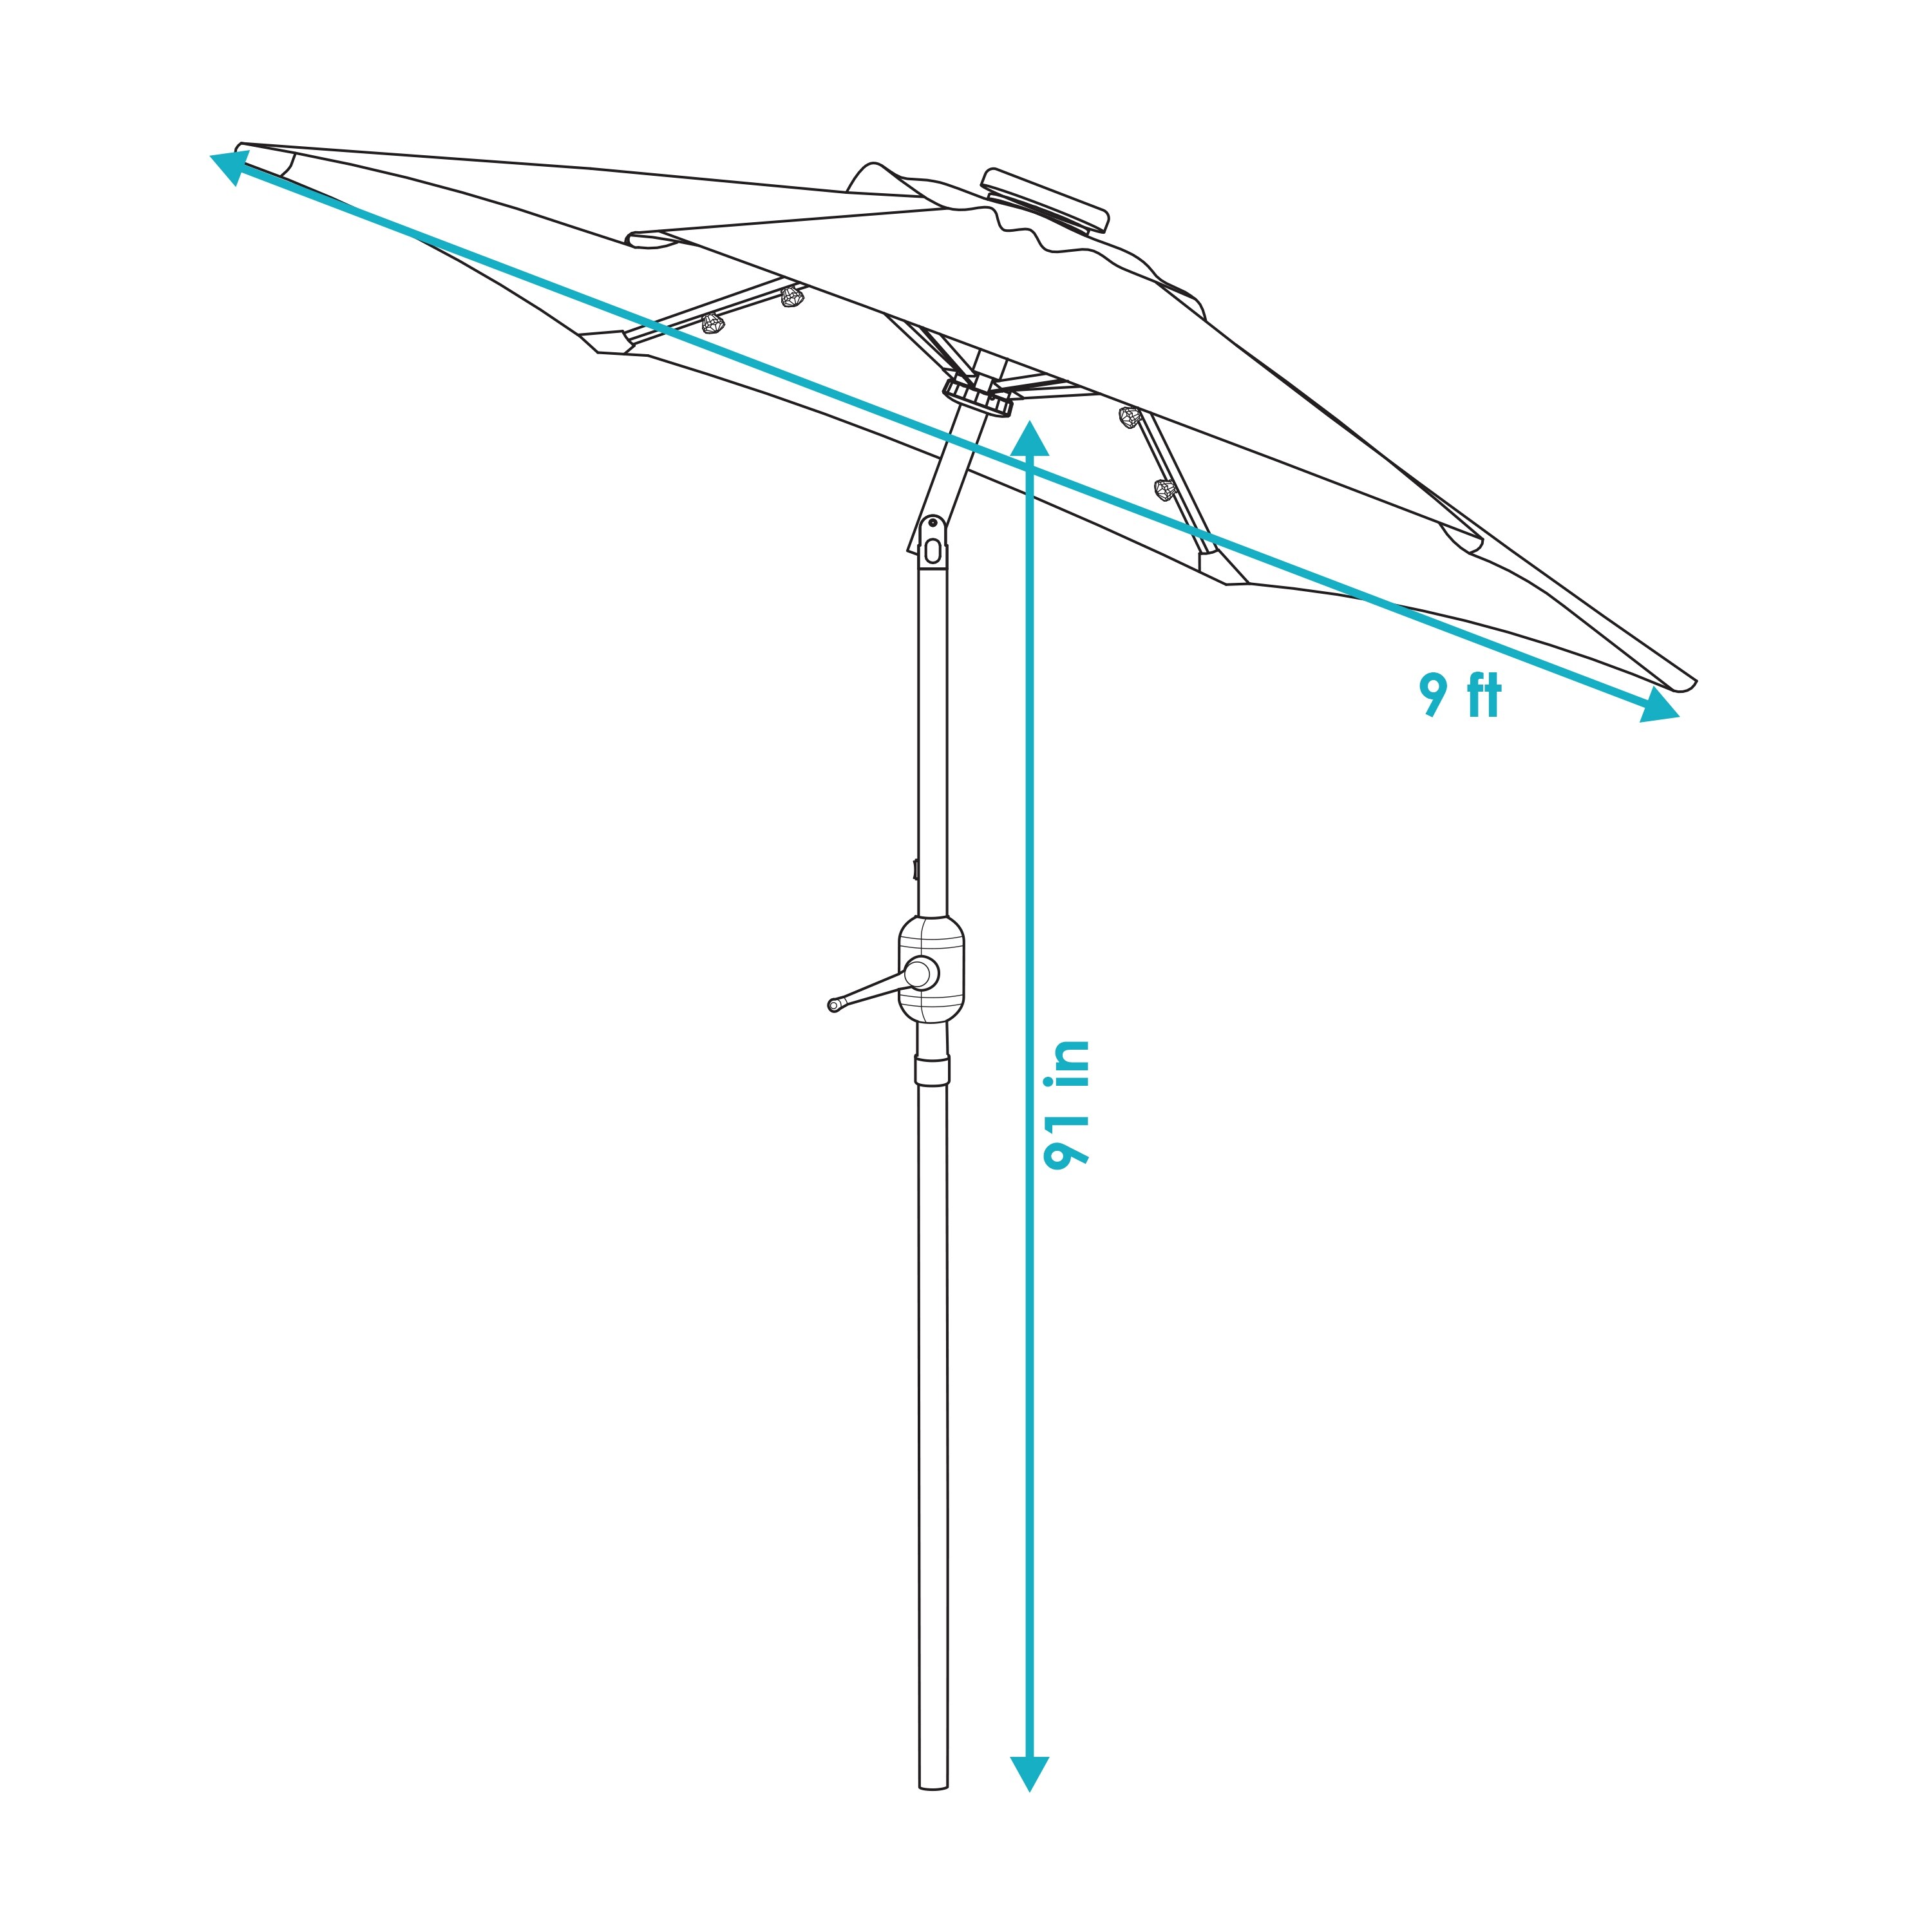 9' Aluminum Outdoor Solar LED Lighted Umbrella with Tilt - Teal Stripe